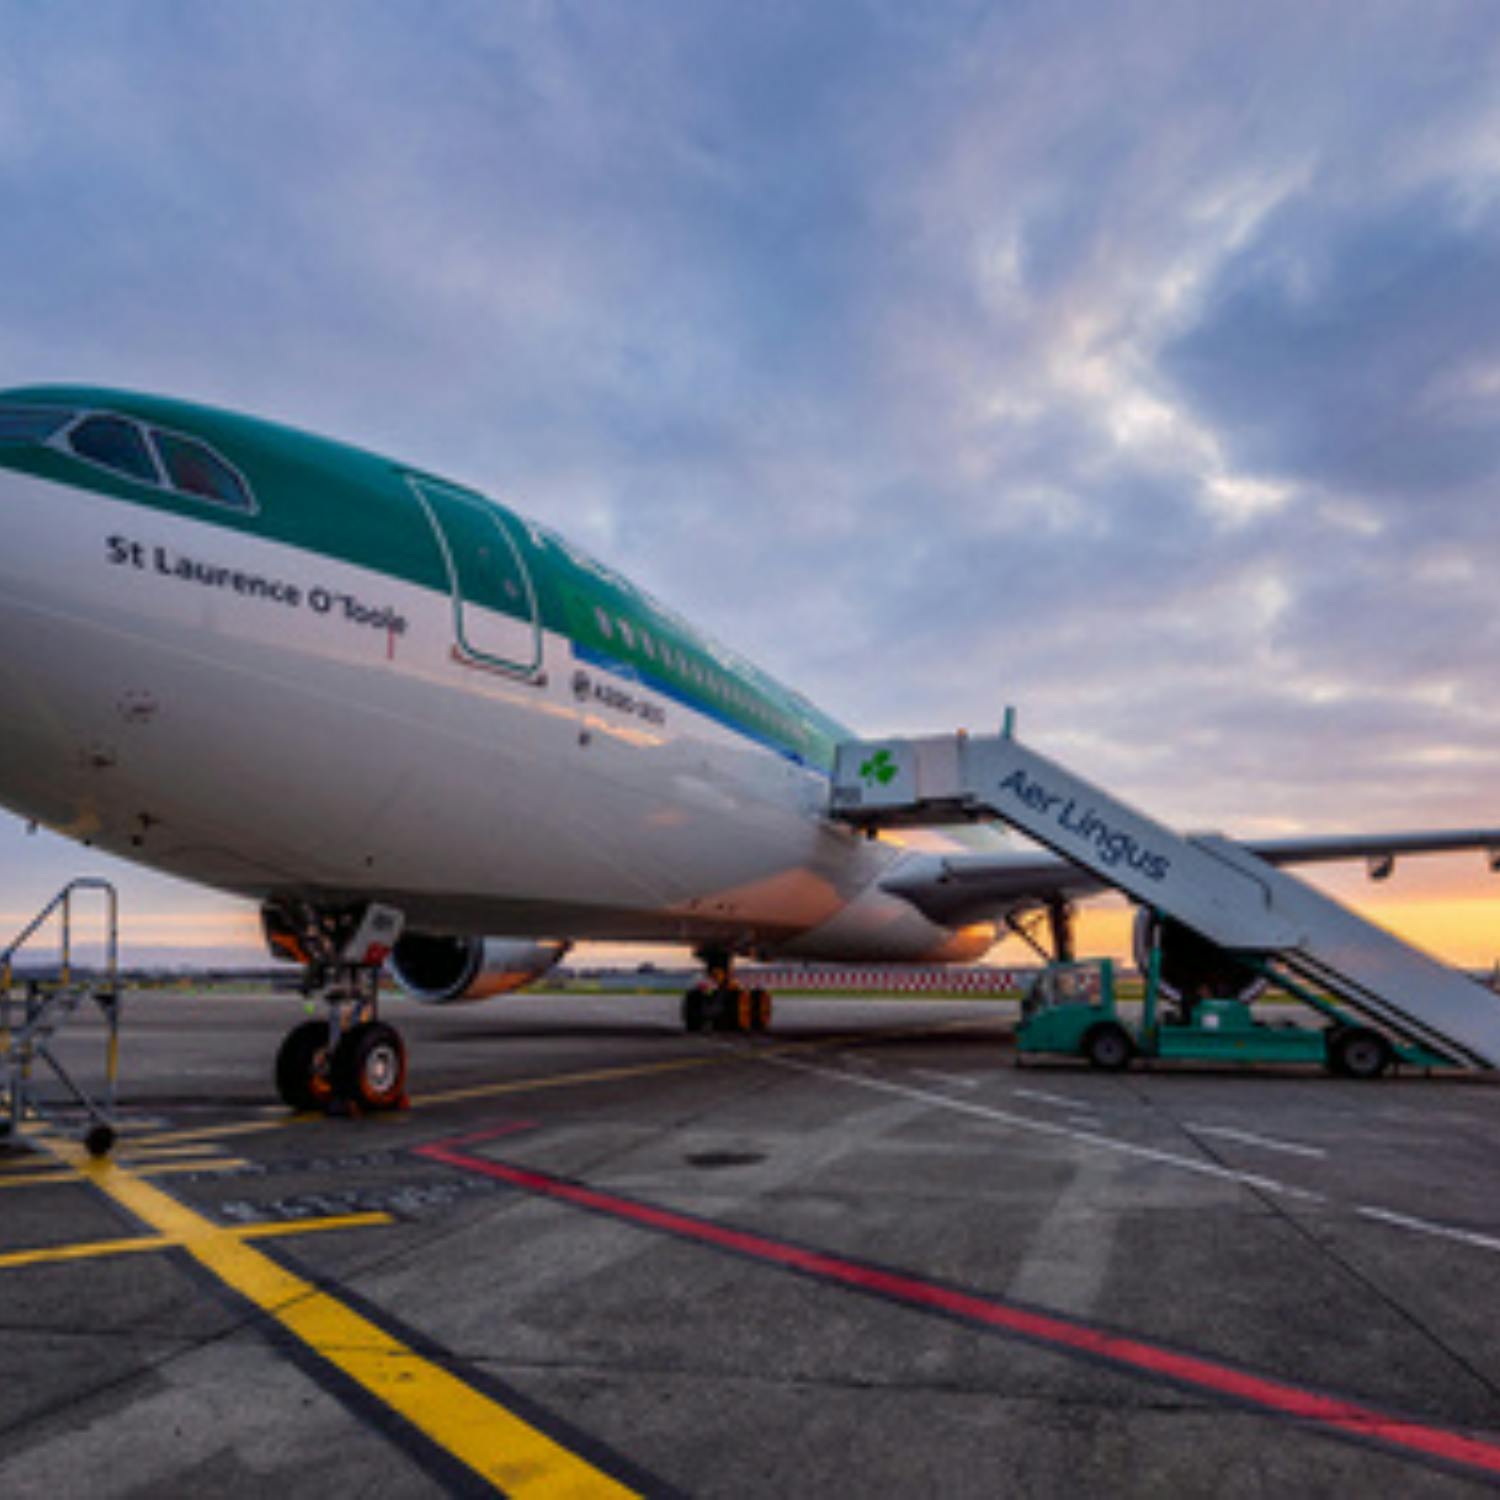 Industrial action by Aer Lingus pilots is underway